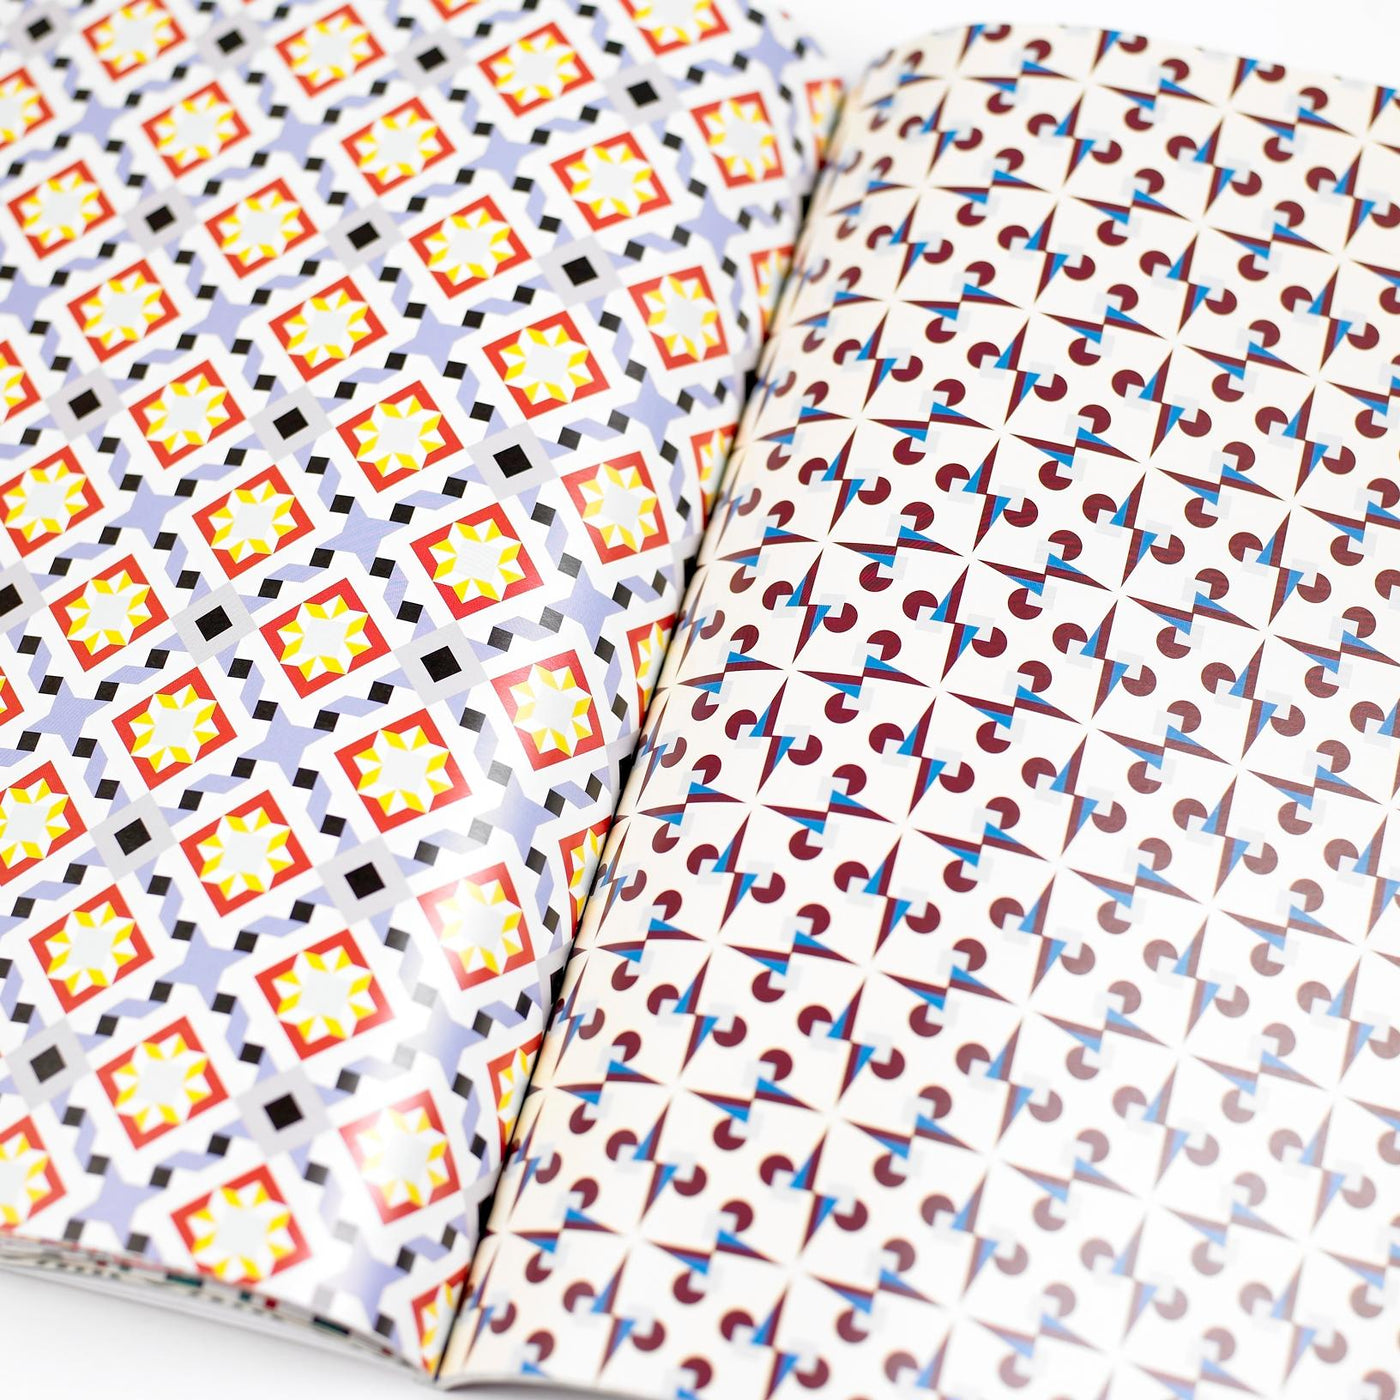 Barcelona Tiles - Gift & Creative Paper Book